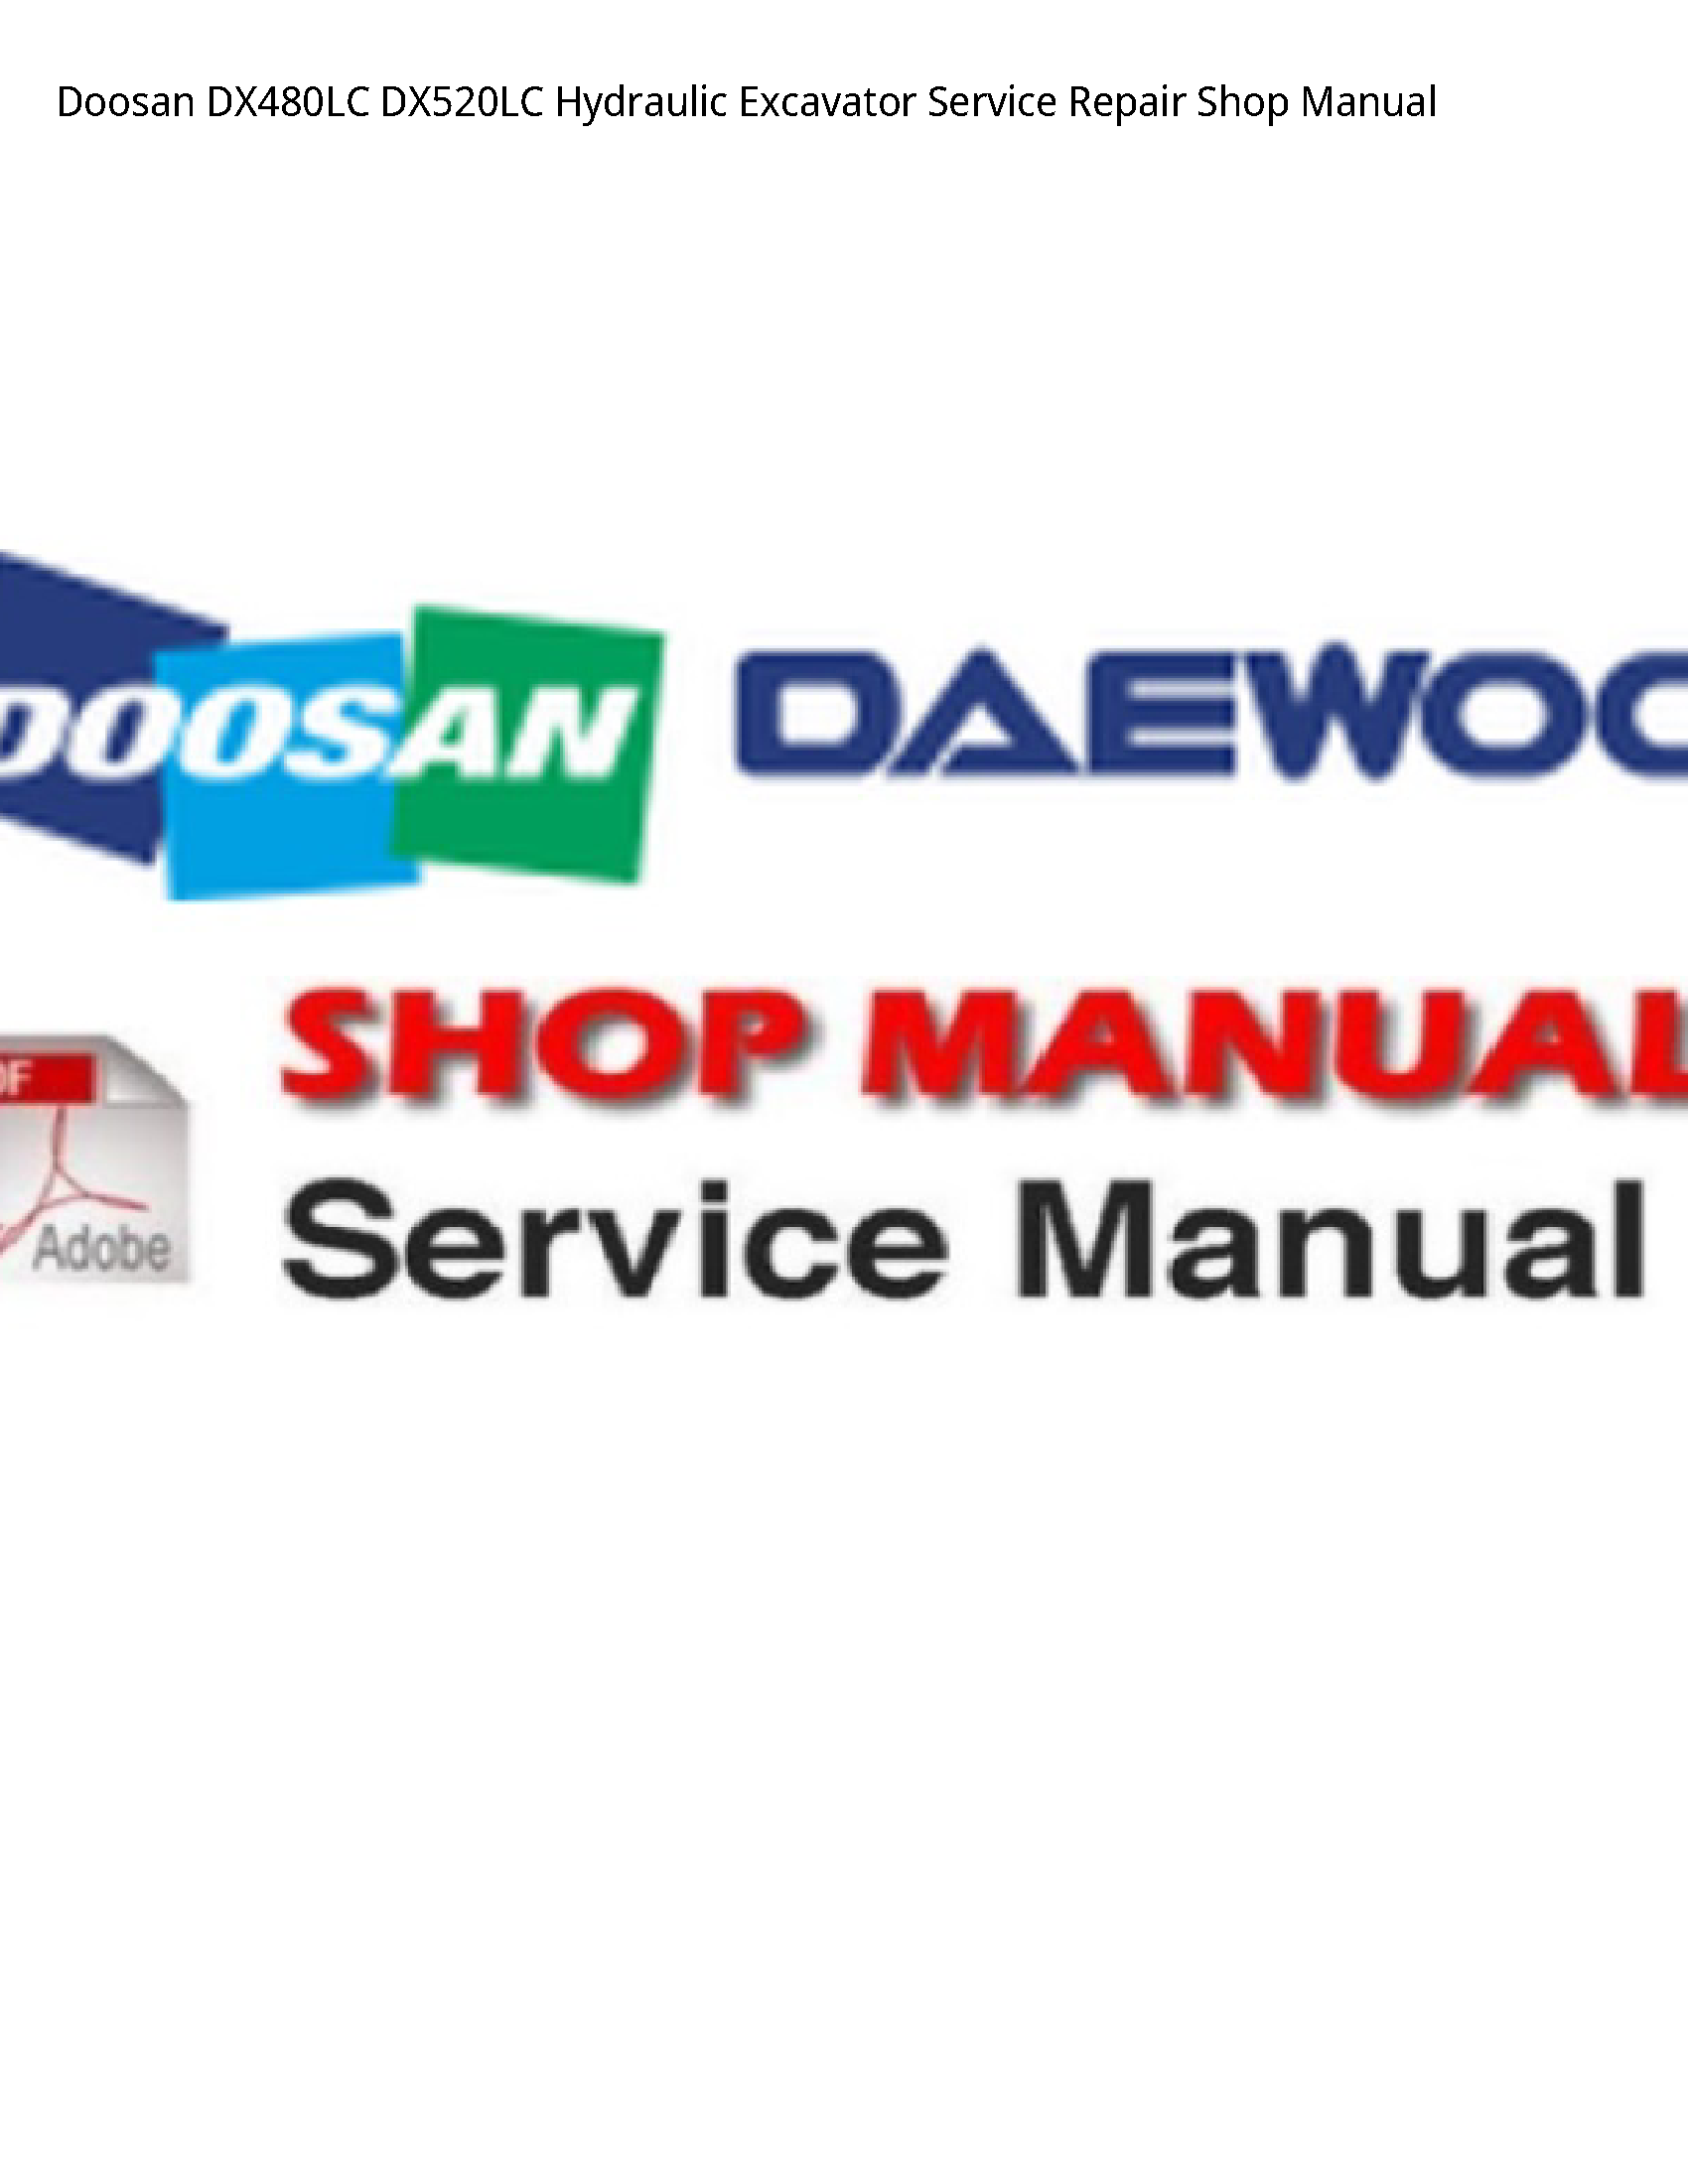 Doosan DX480LC Hydraulic Excavator manual